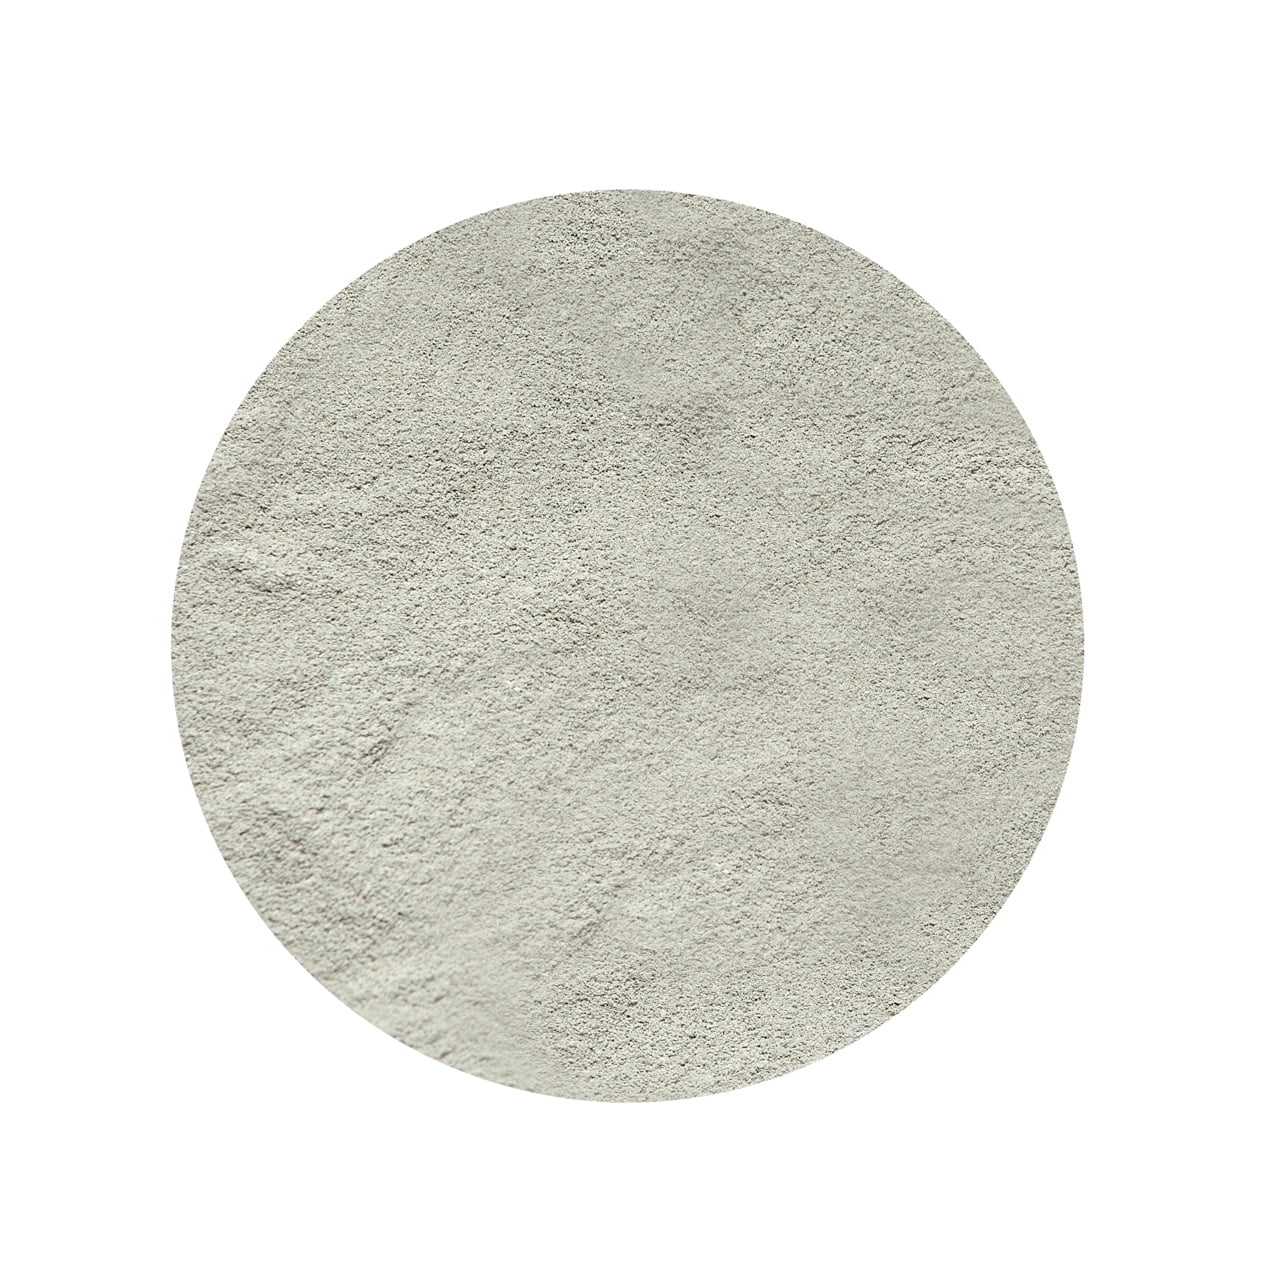 Details about   MOISTURESORB Natural Moisture Remover Eco Desiccant Powder 50 lb. 